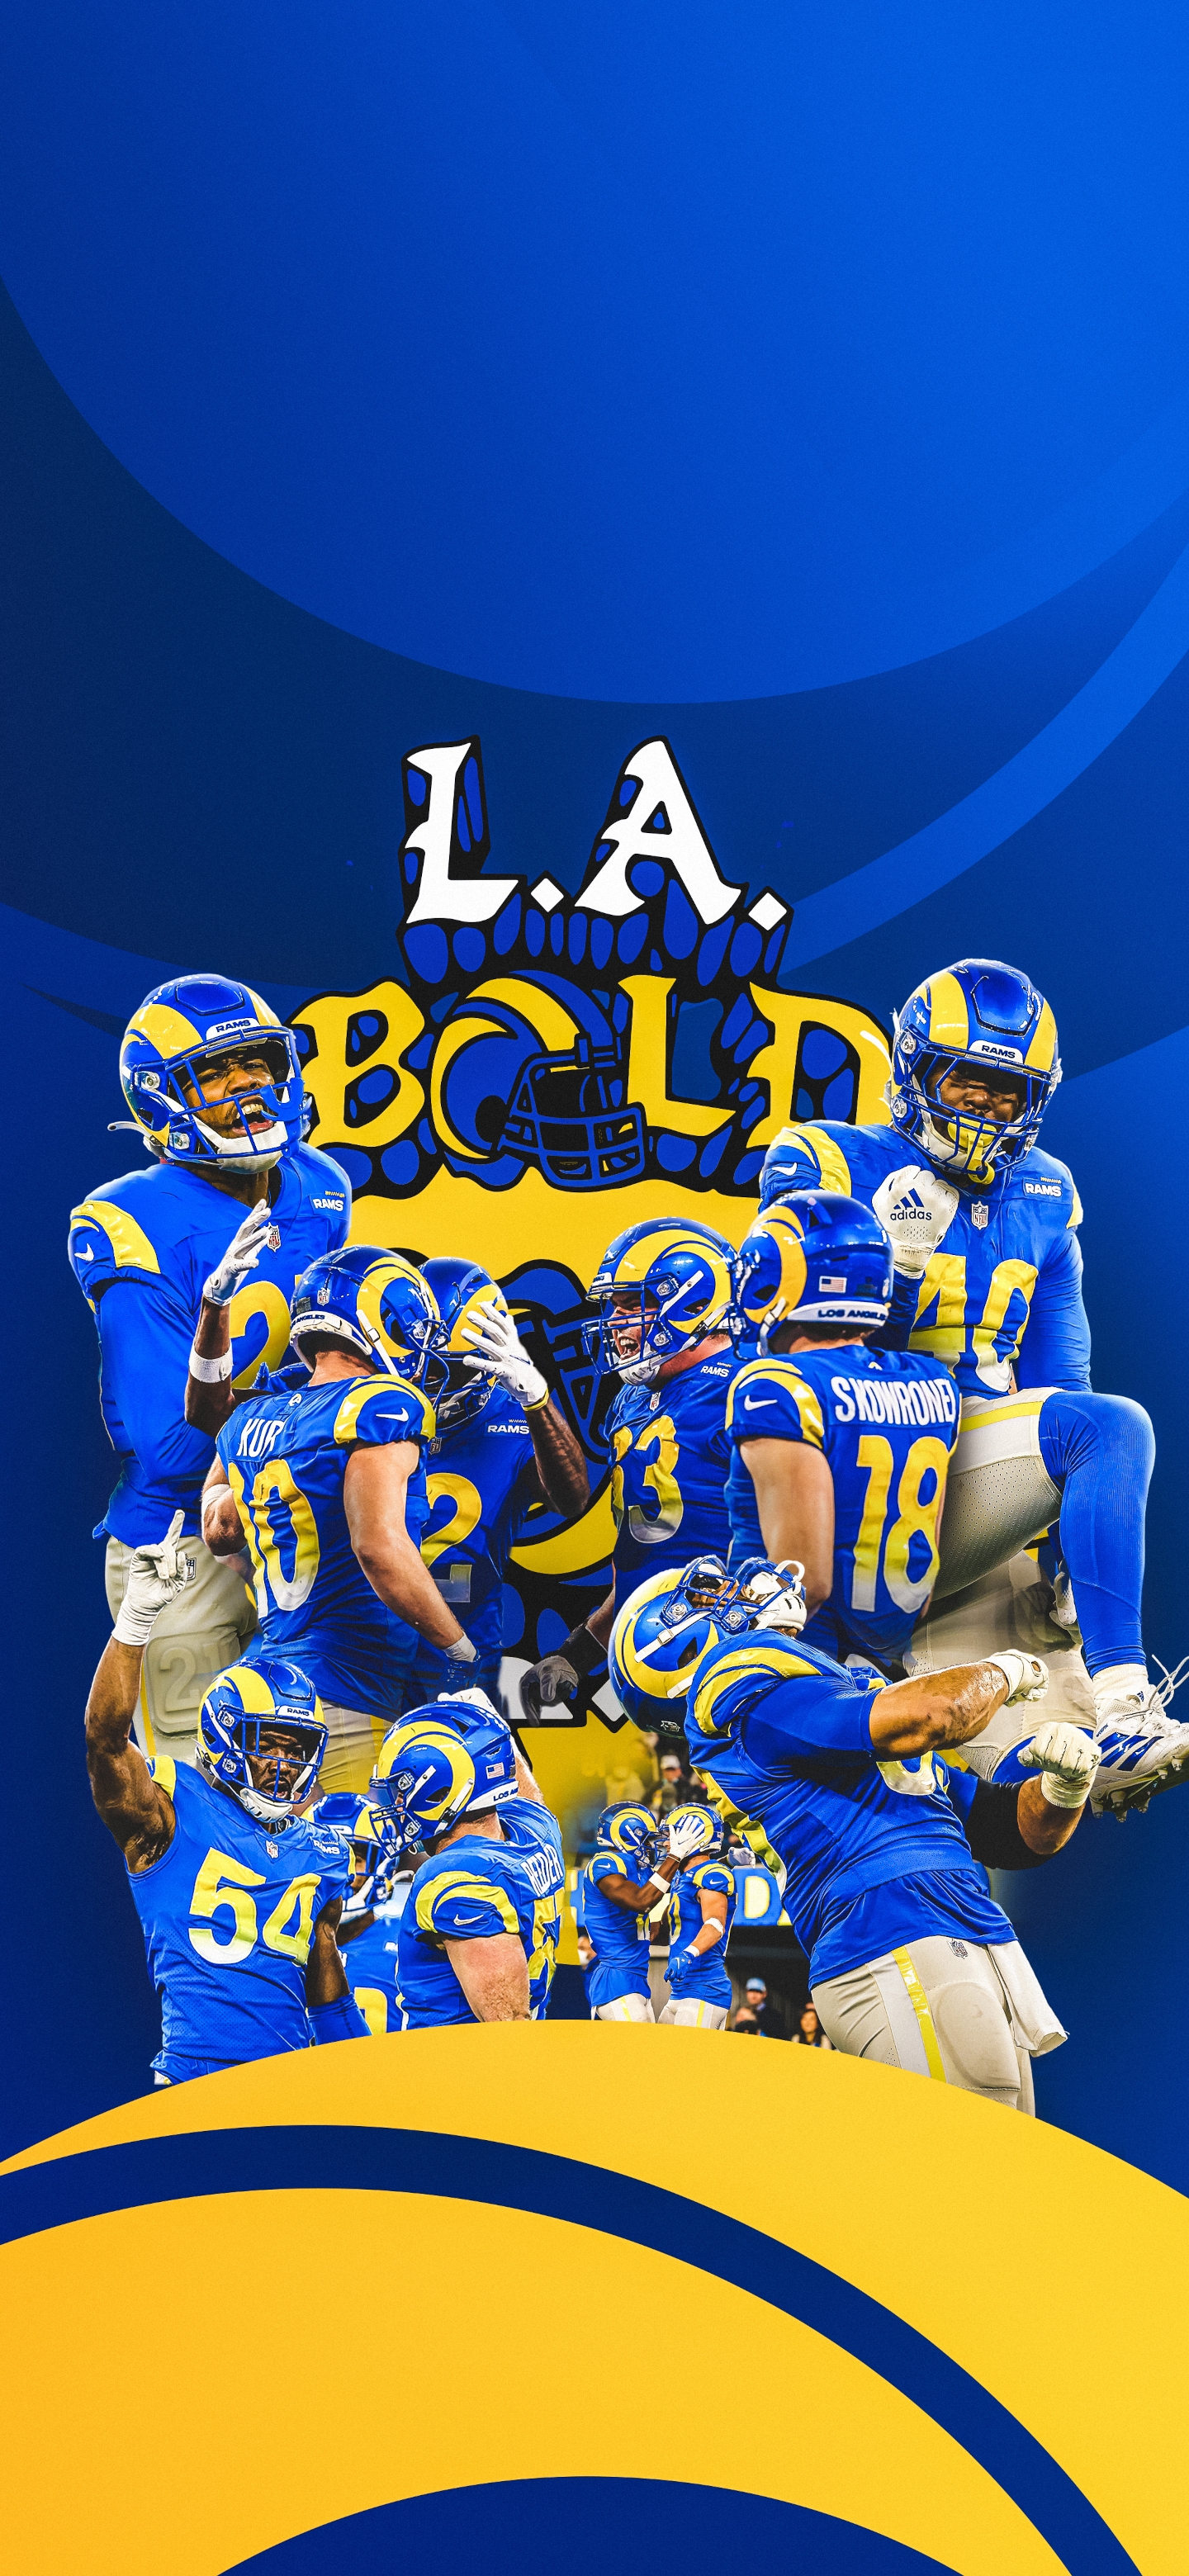 Handy-Wallpaper Sport, Fußball, Los Angeles Rams kostenlos herunterladen.